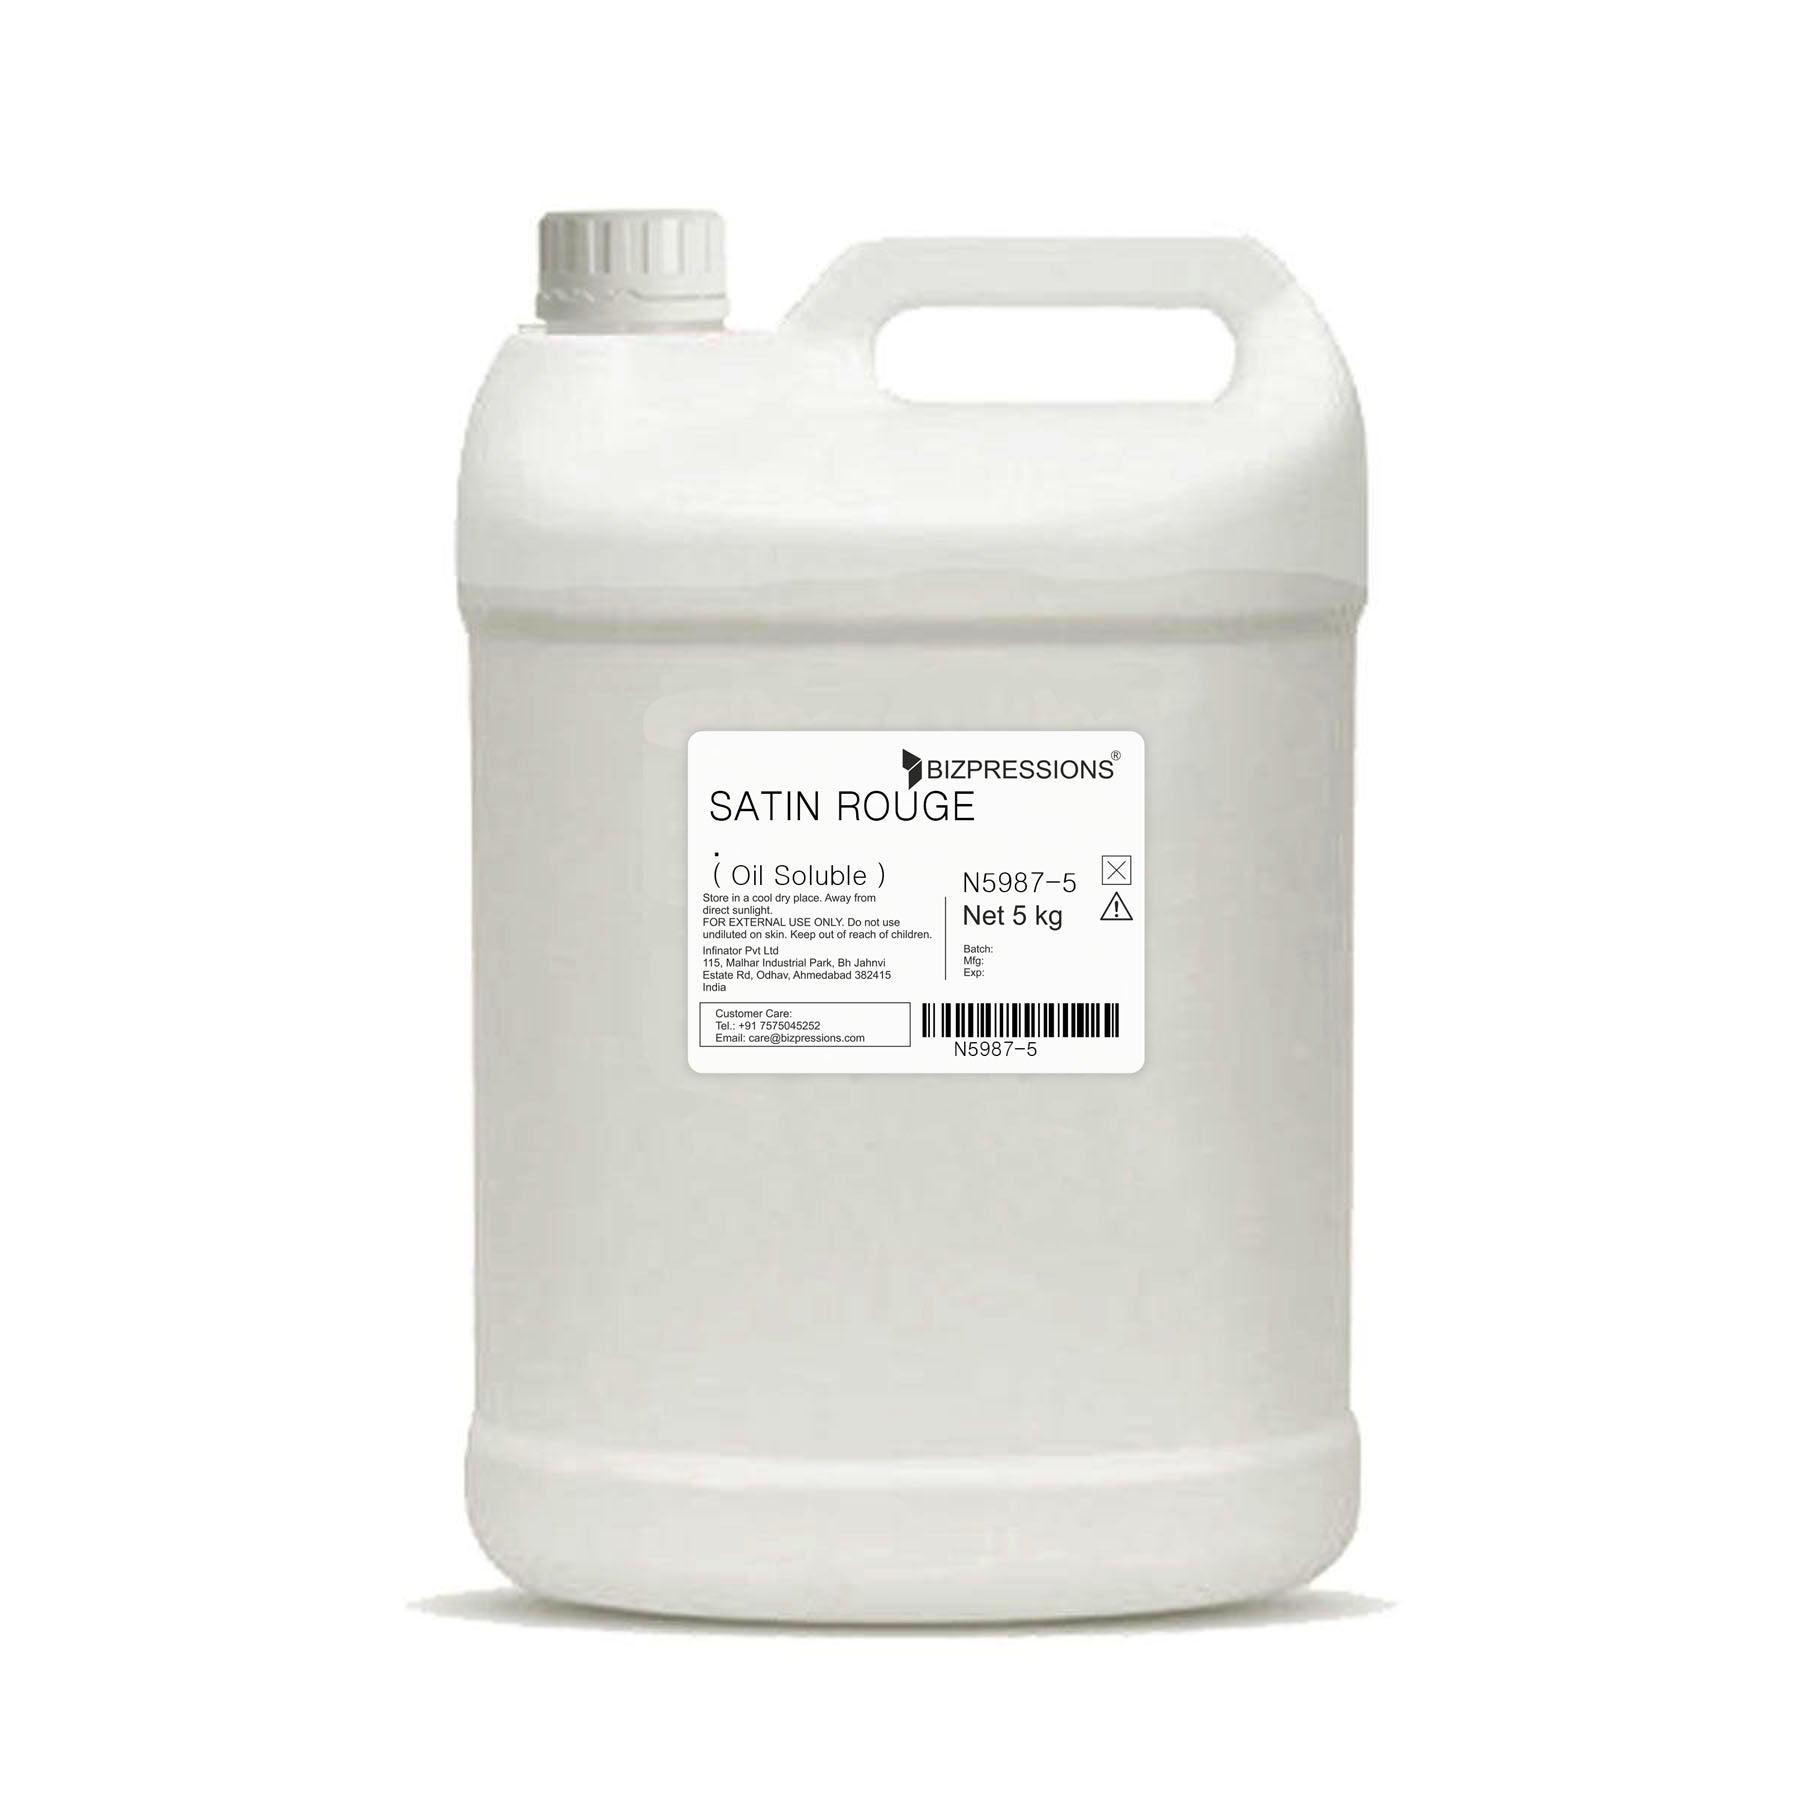 SATIN ROUGE - Fragrance ( Oil Soluble ) - 5 kg